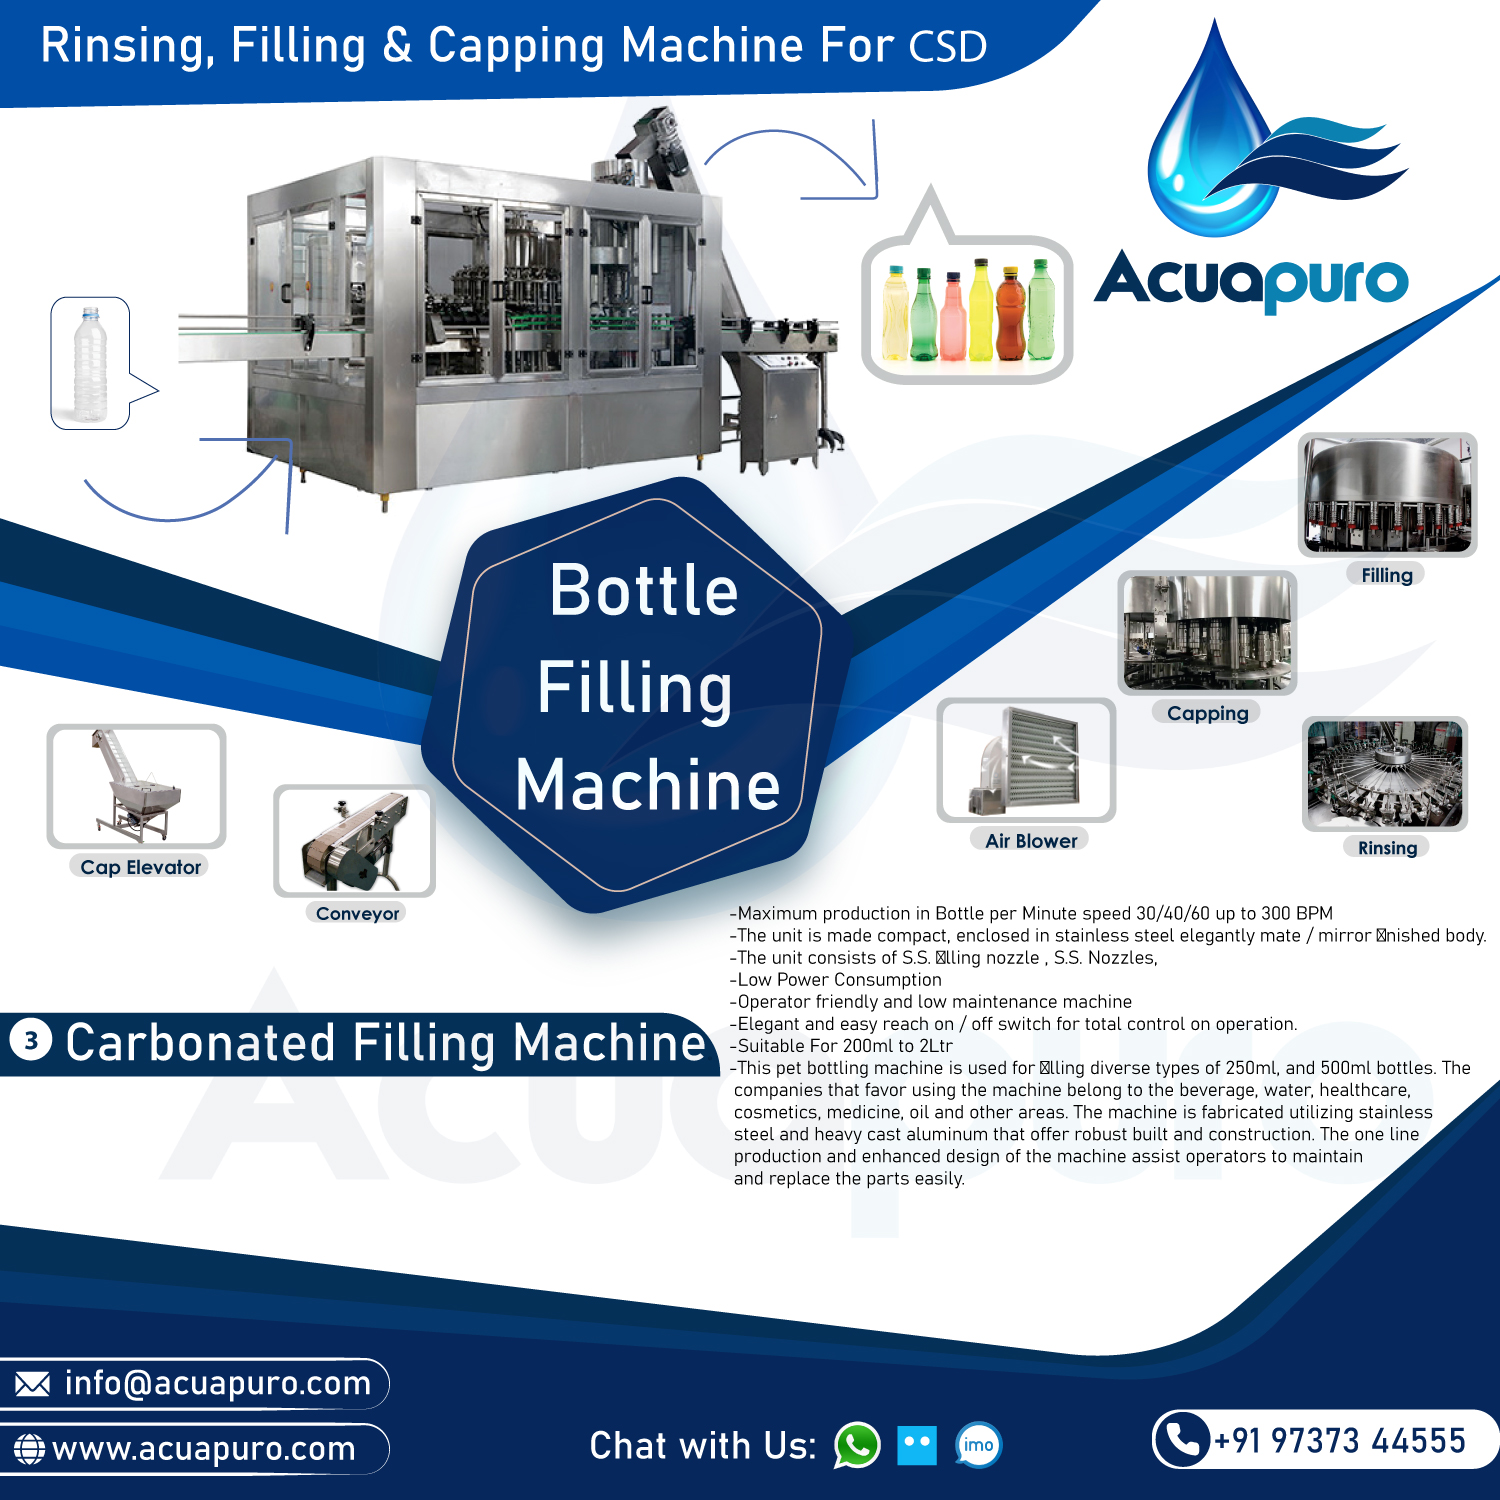 Carbonated Filling Machines in Ahmedabad, India - Acuapuro Water